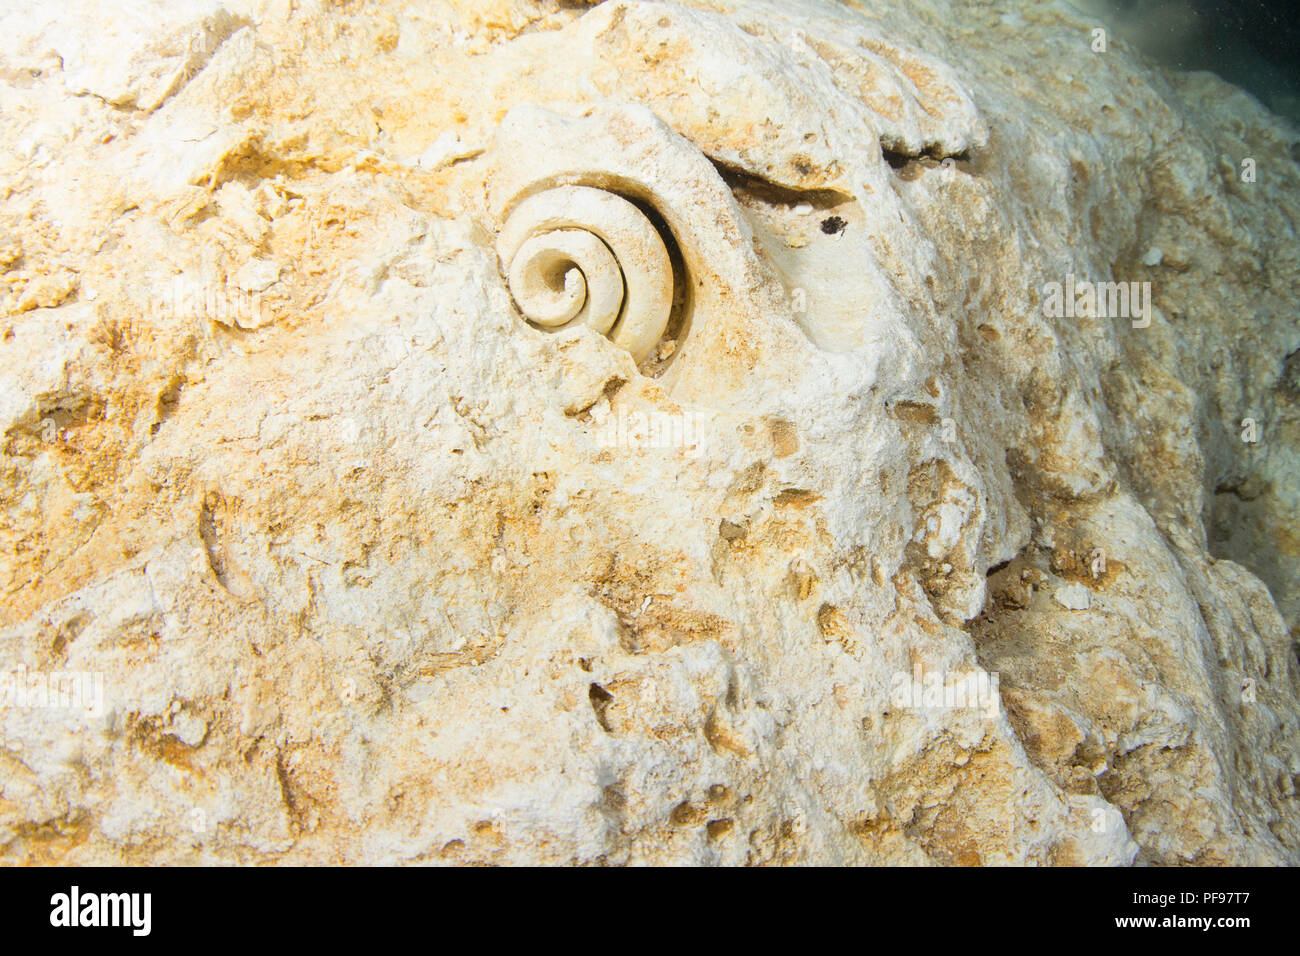 Los fósiles, fósiles de caracol en acantilados de piedra caliza, Cenote Tajma Ha cueva submarina, Playa del Carmen, Quintana Roo, México. Foto de stock